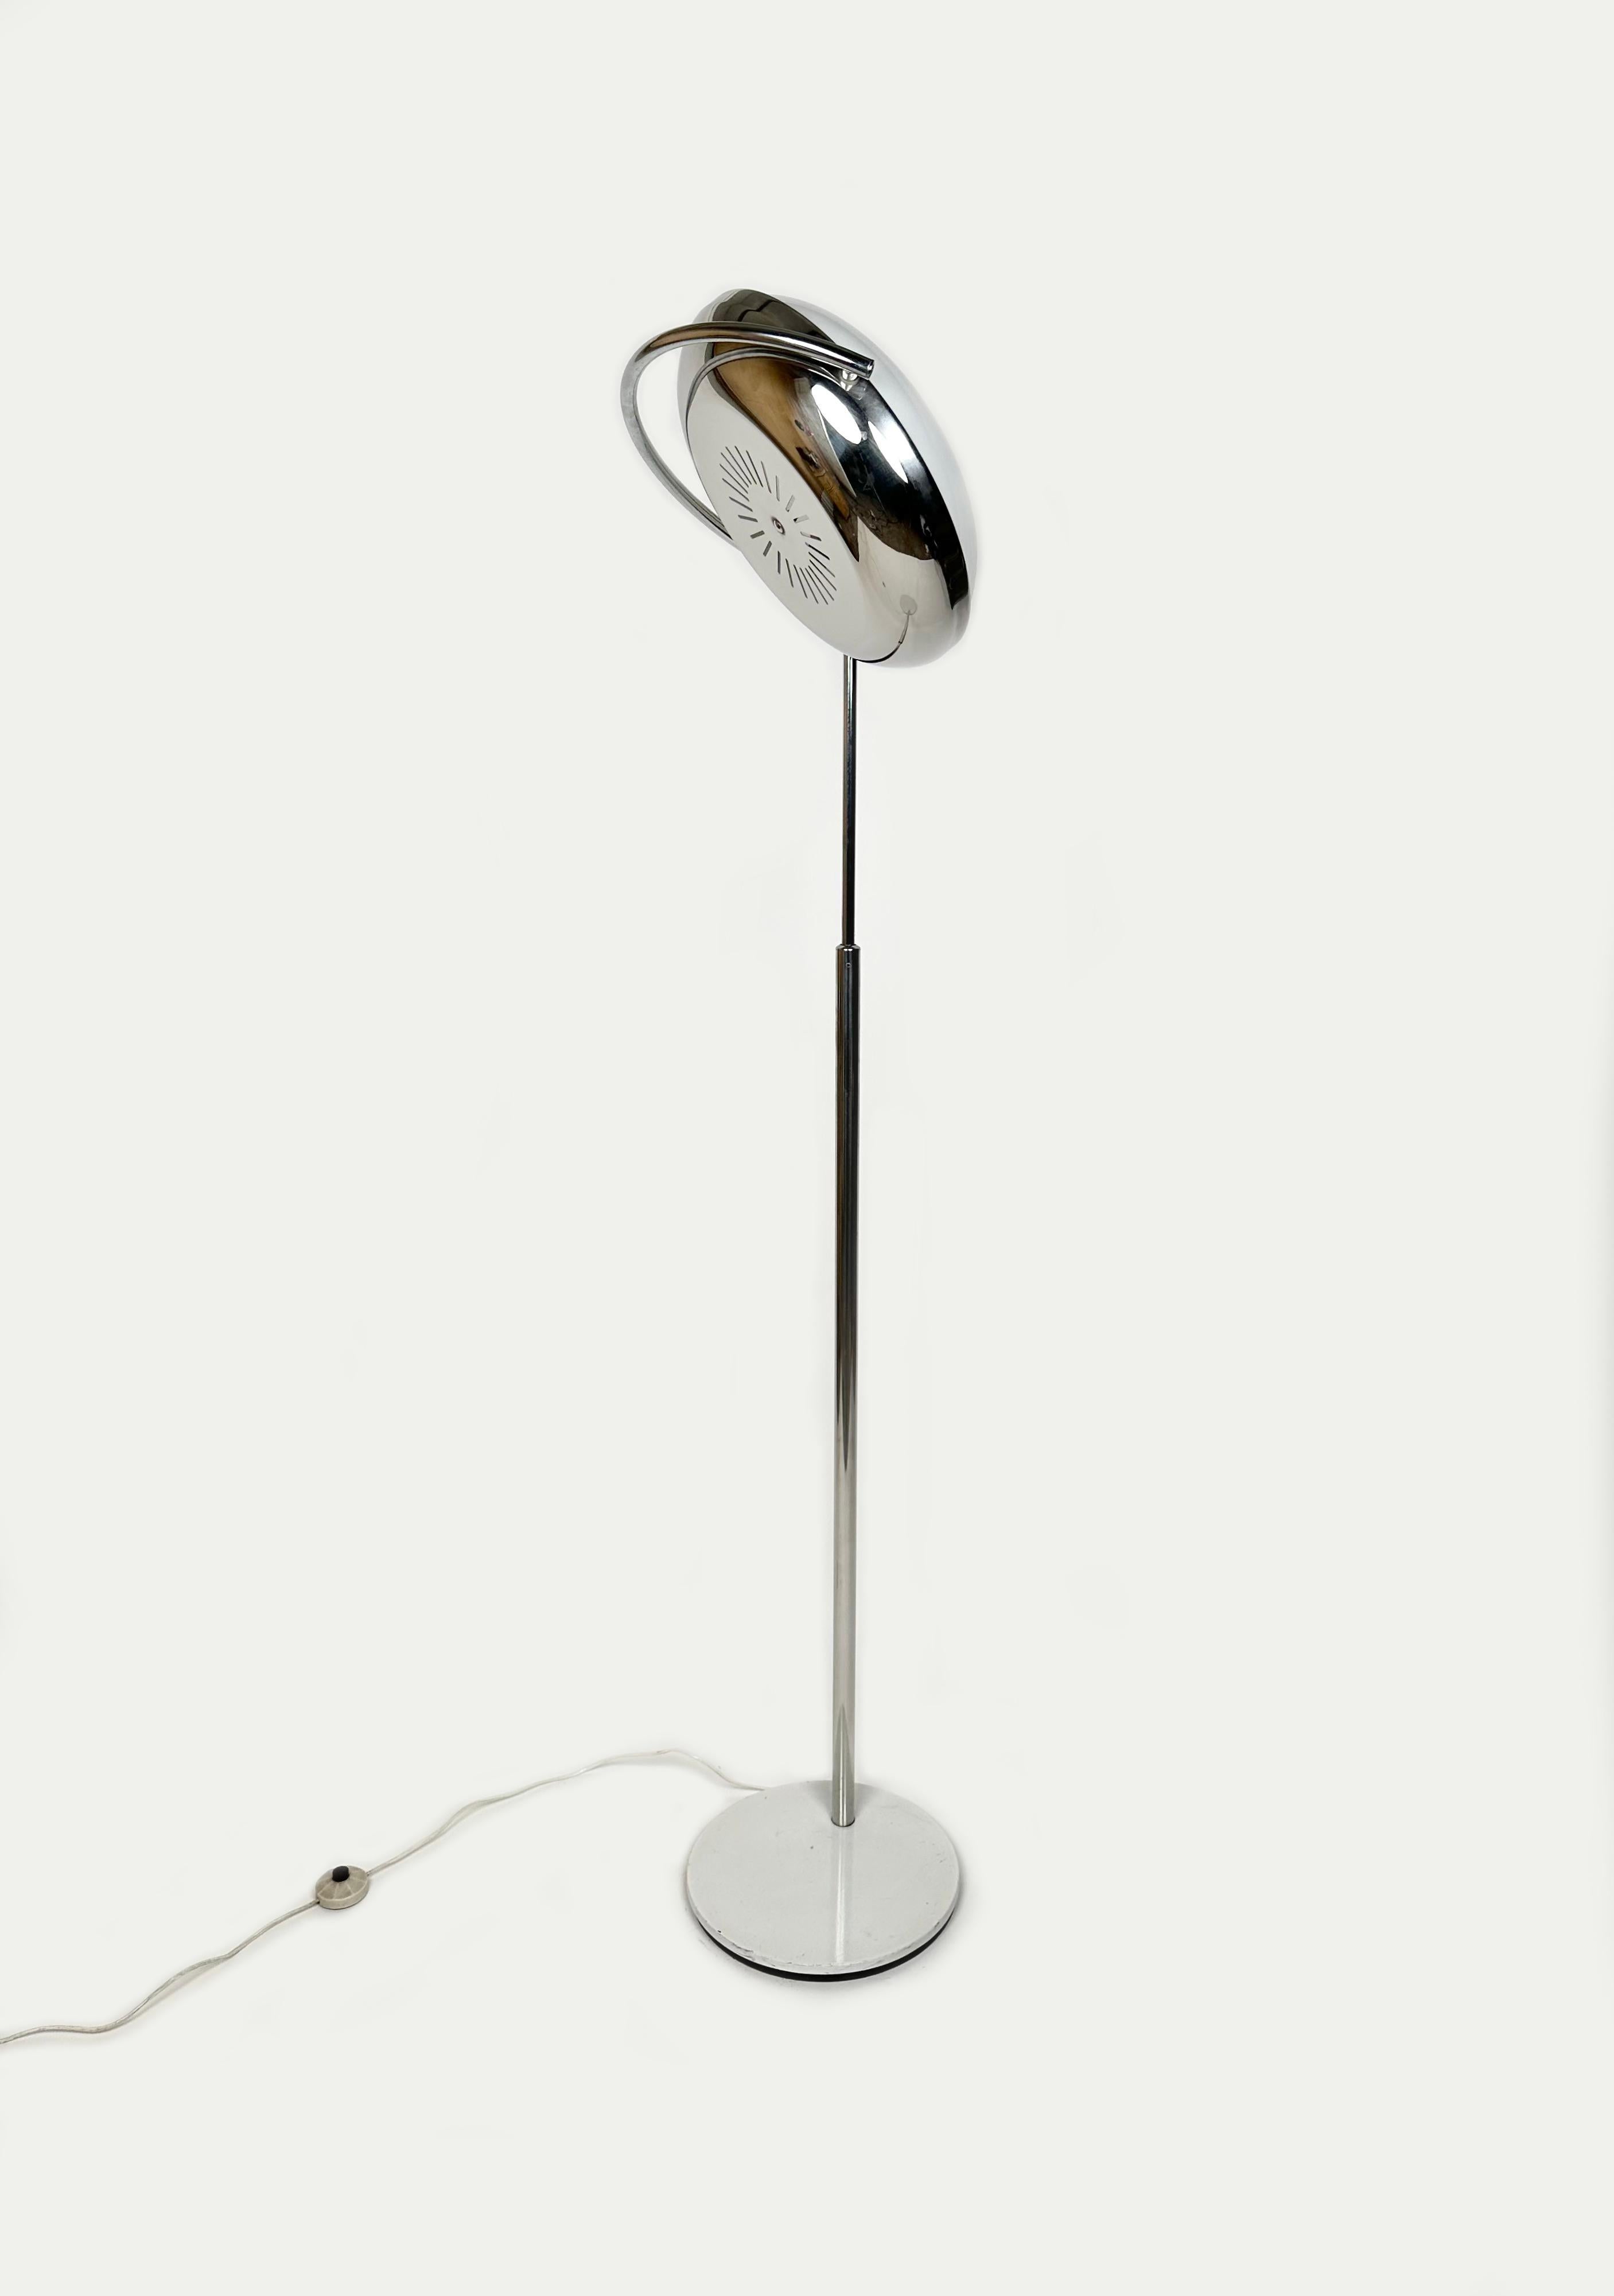 Midcentury Adjustable Floor Lamp in Chrome & Plexiglass by Reggiani, Italy 1970s For Sale 2